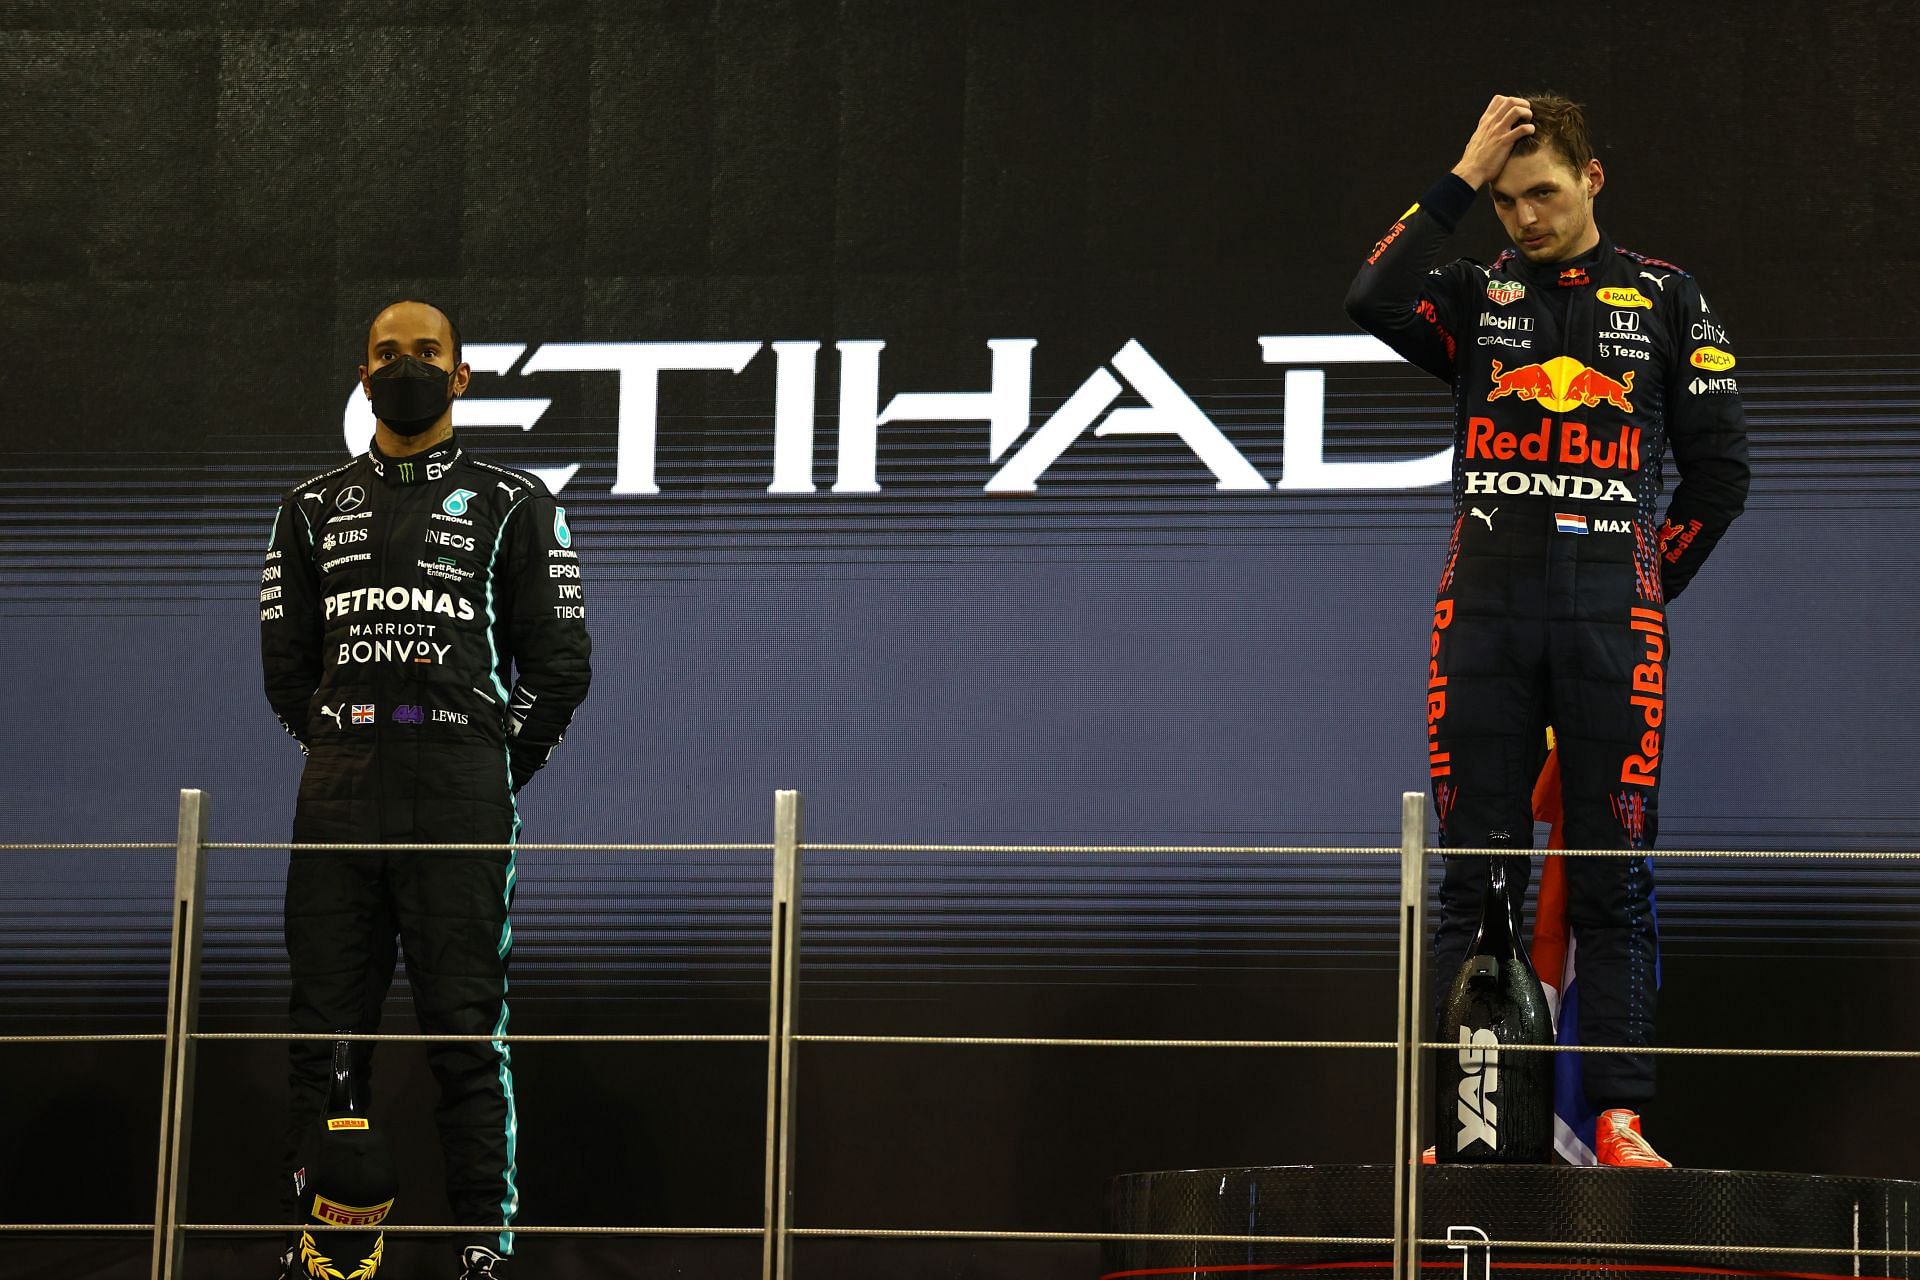 F1 Grand Prix of Abu Dhabi - Lewis Hamilton and Max Verstappen on the podium